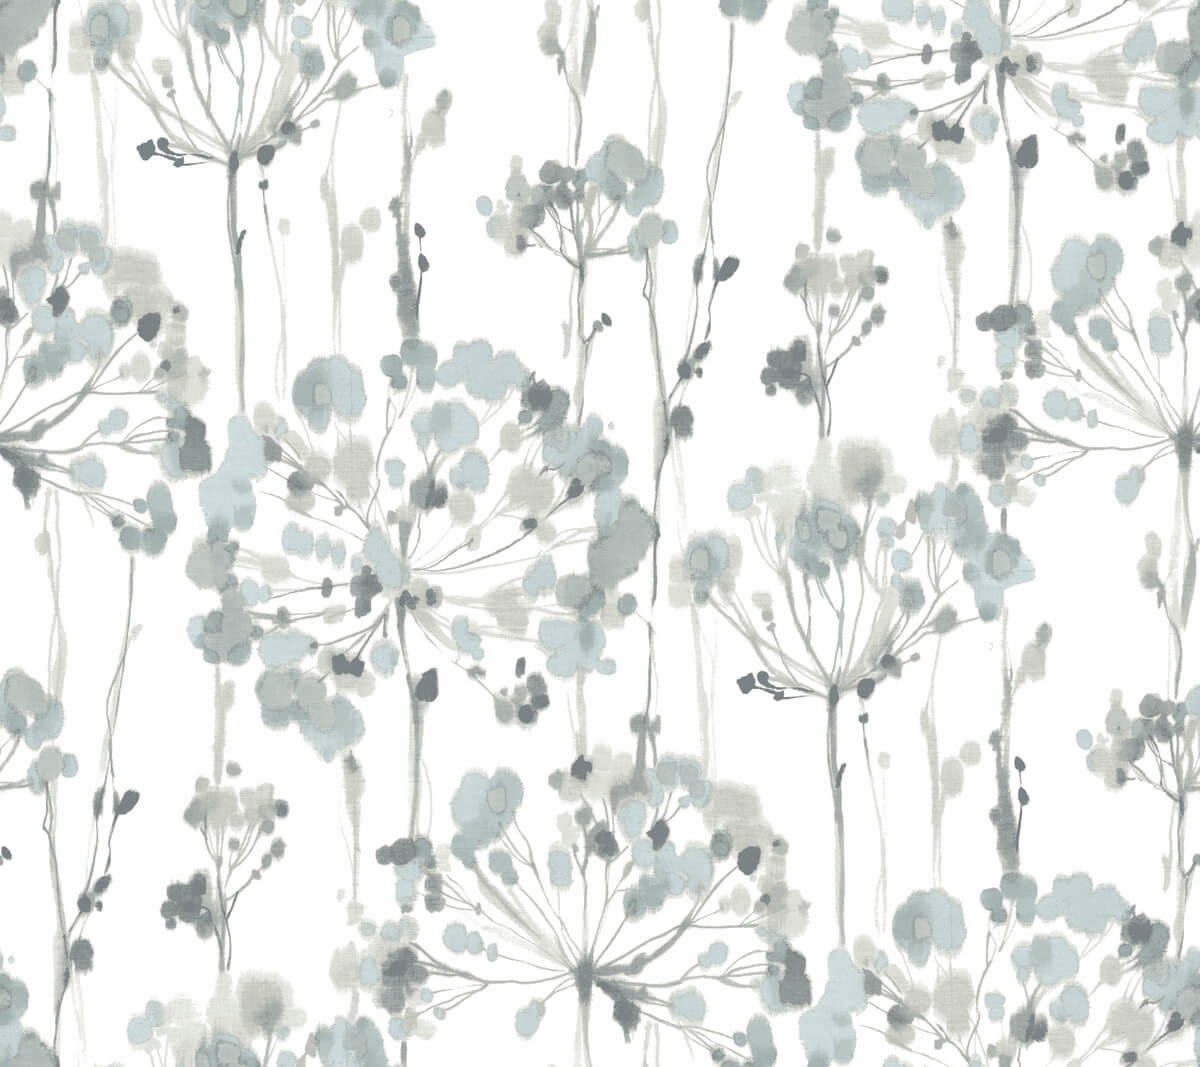 Simply Candice Olson Flourish Peel & Stick Wallpaper - Sheer Blue